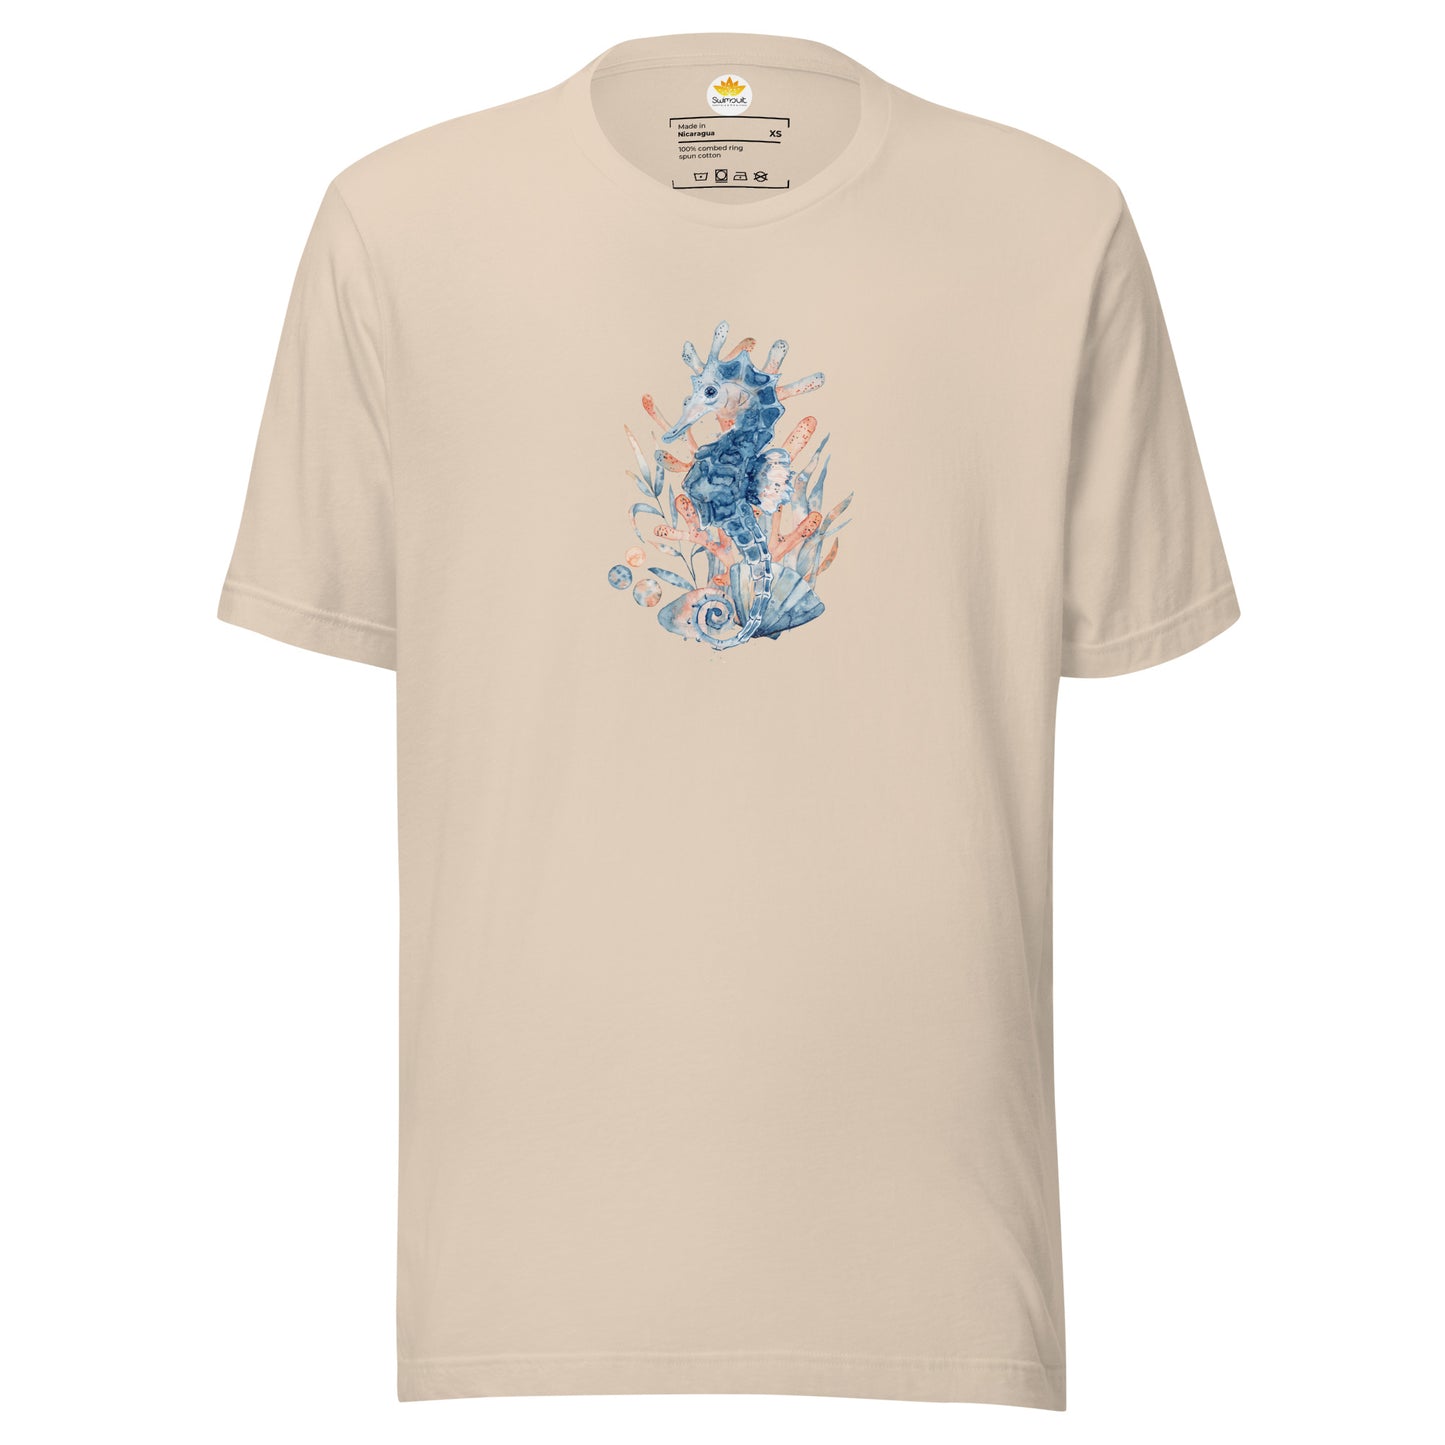 Sea Life - Seahorse Print Short Sleeve T-Shirt (Sand)